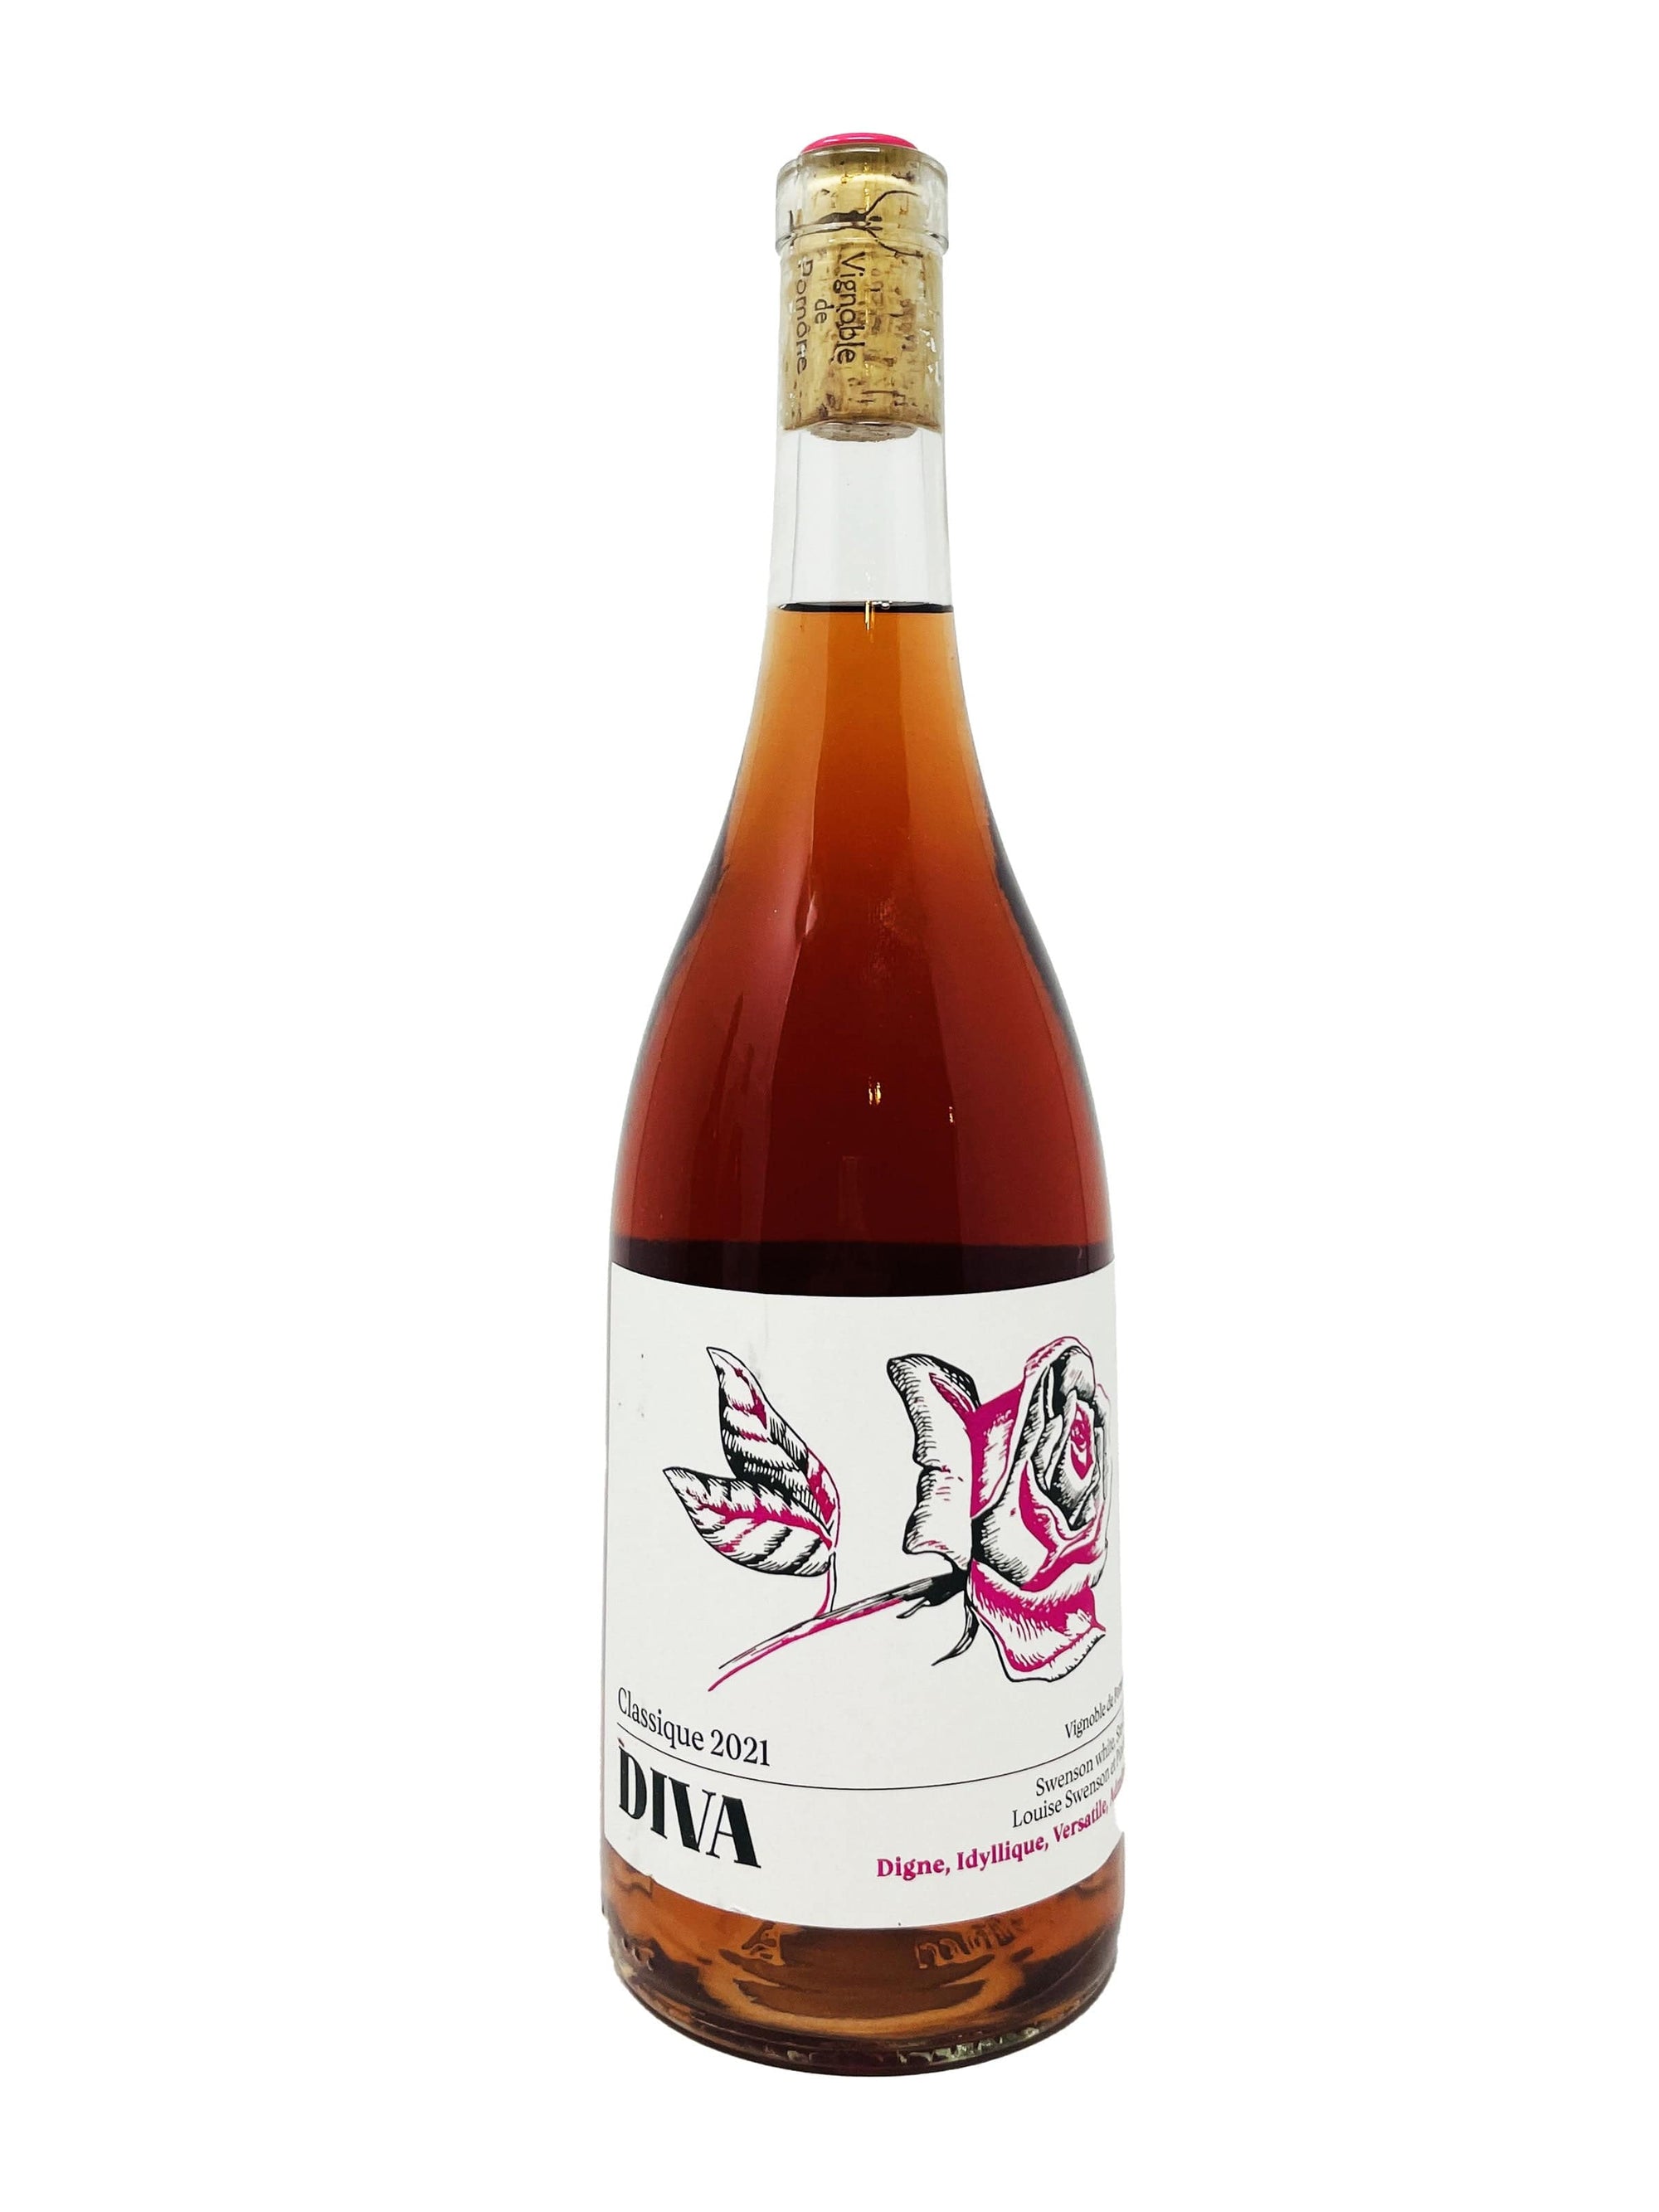 Vignoble de Pomone vin Diva Classique 2021 - Vin Rosé du Vignoble de Pomone